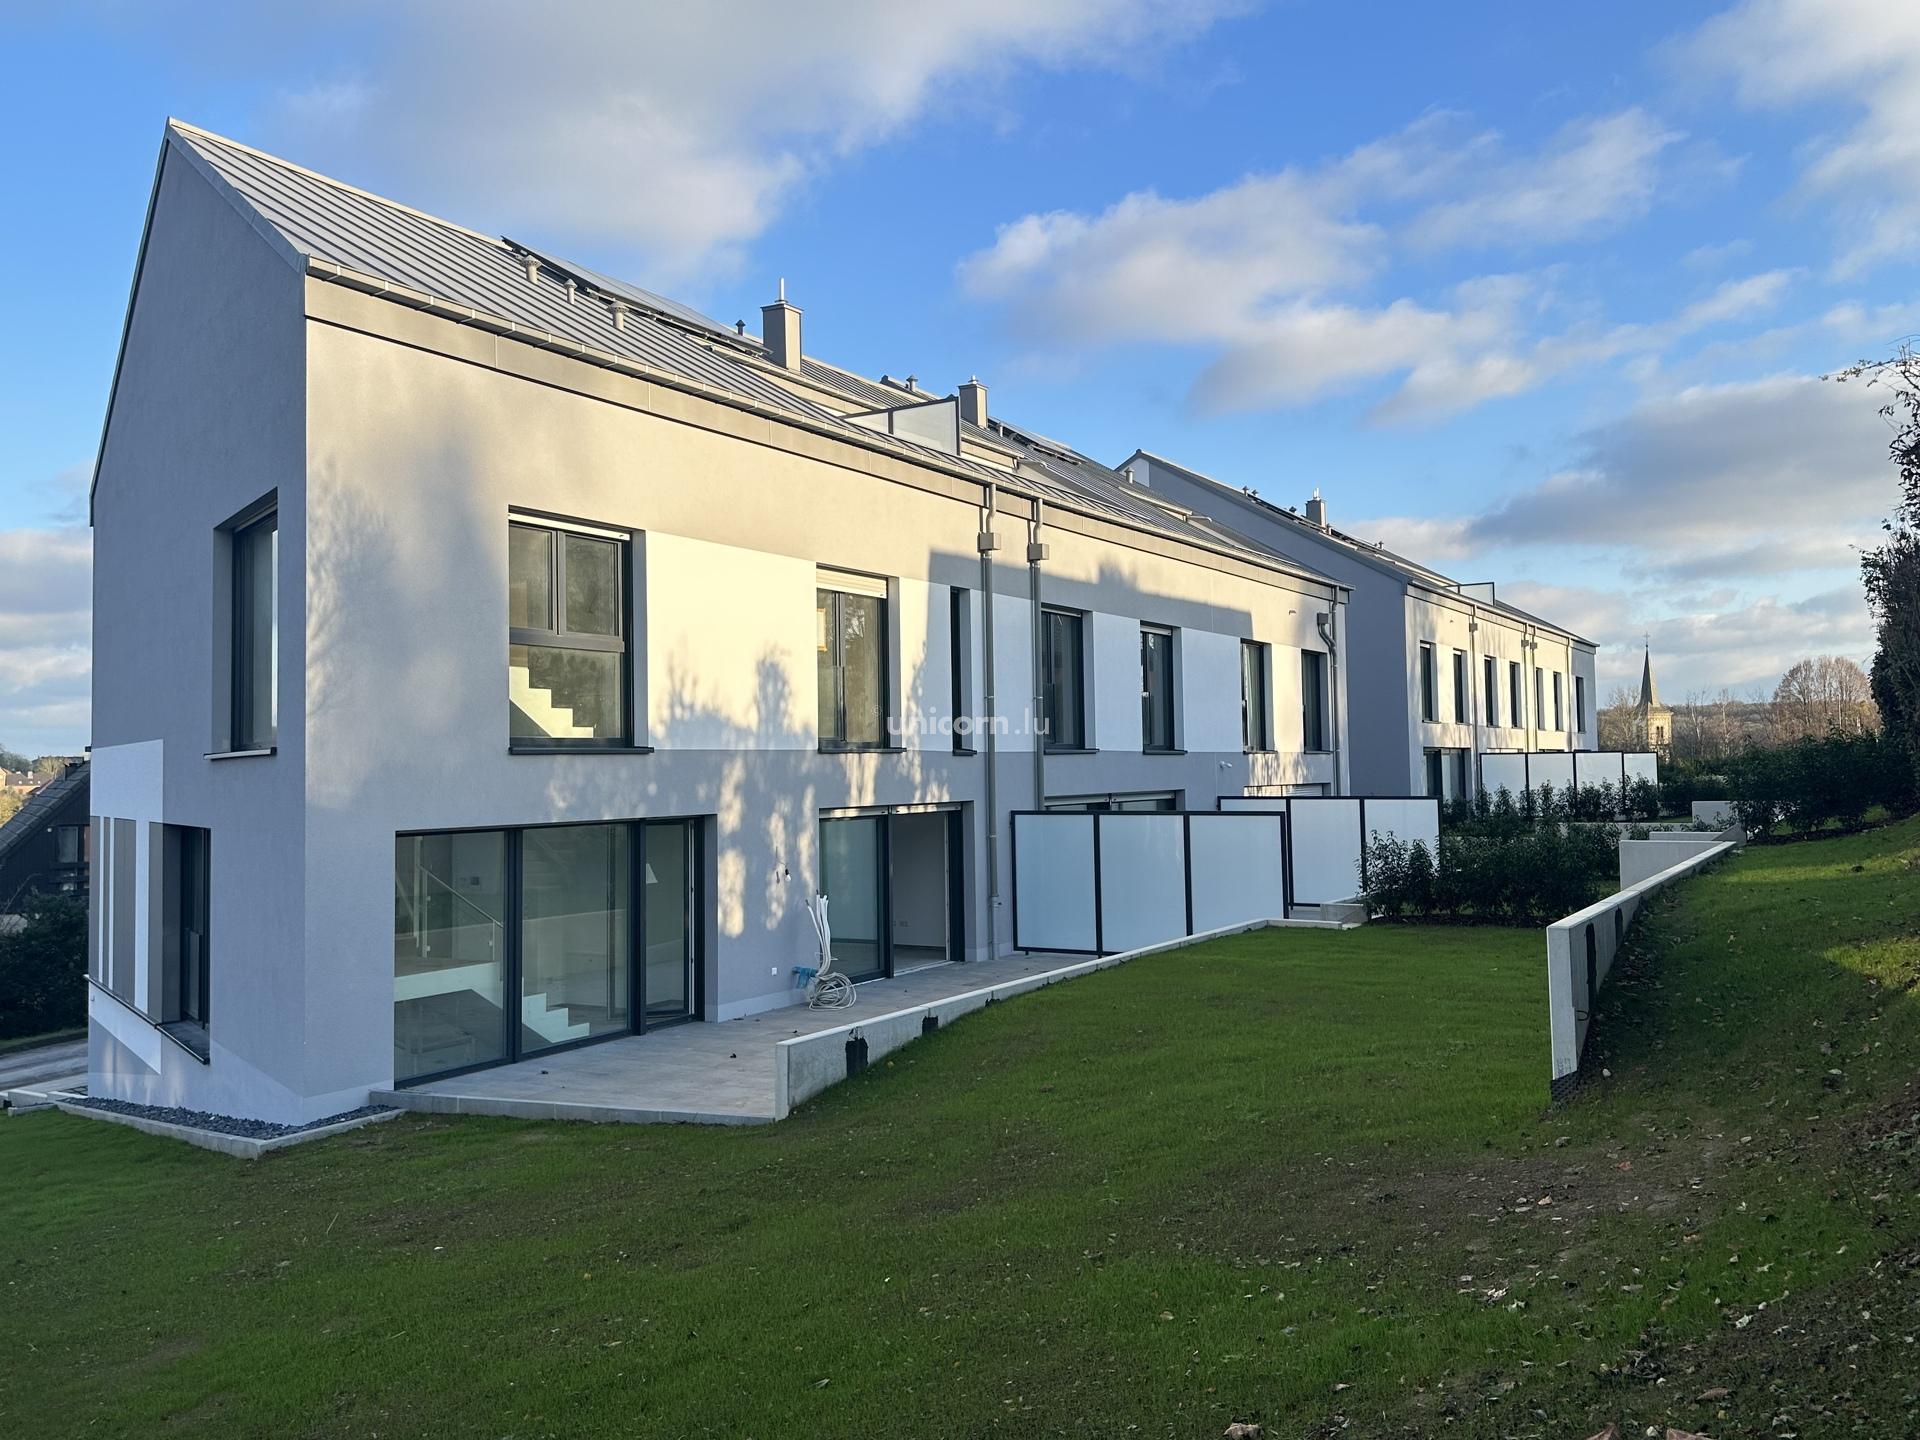  Trengen Knapp - Real estate project in Oetrange